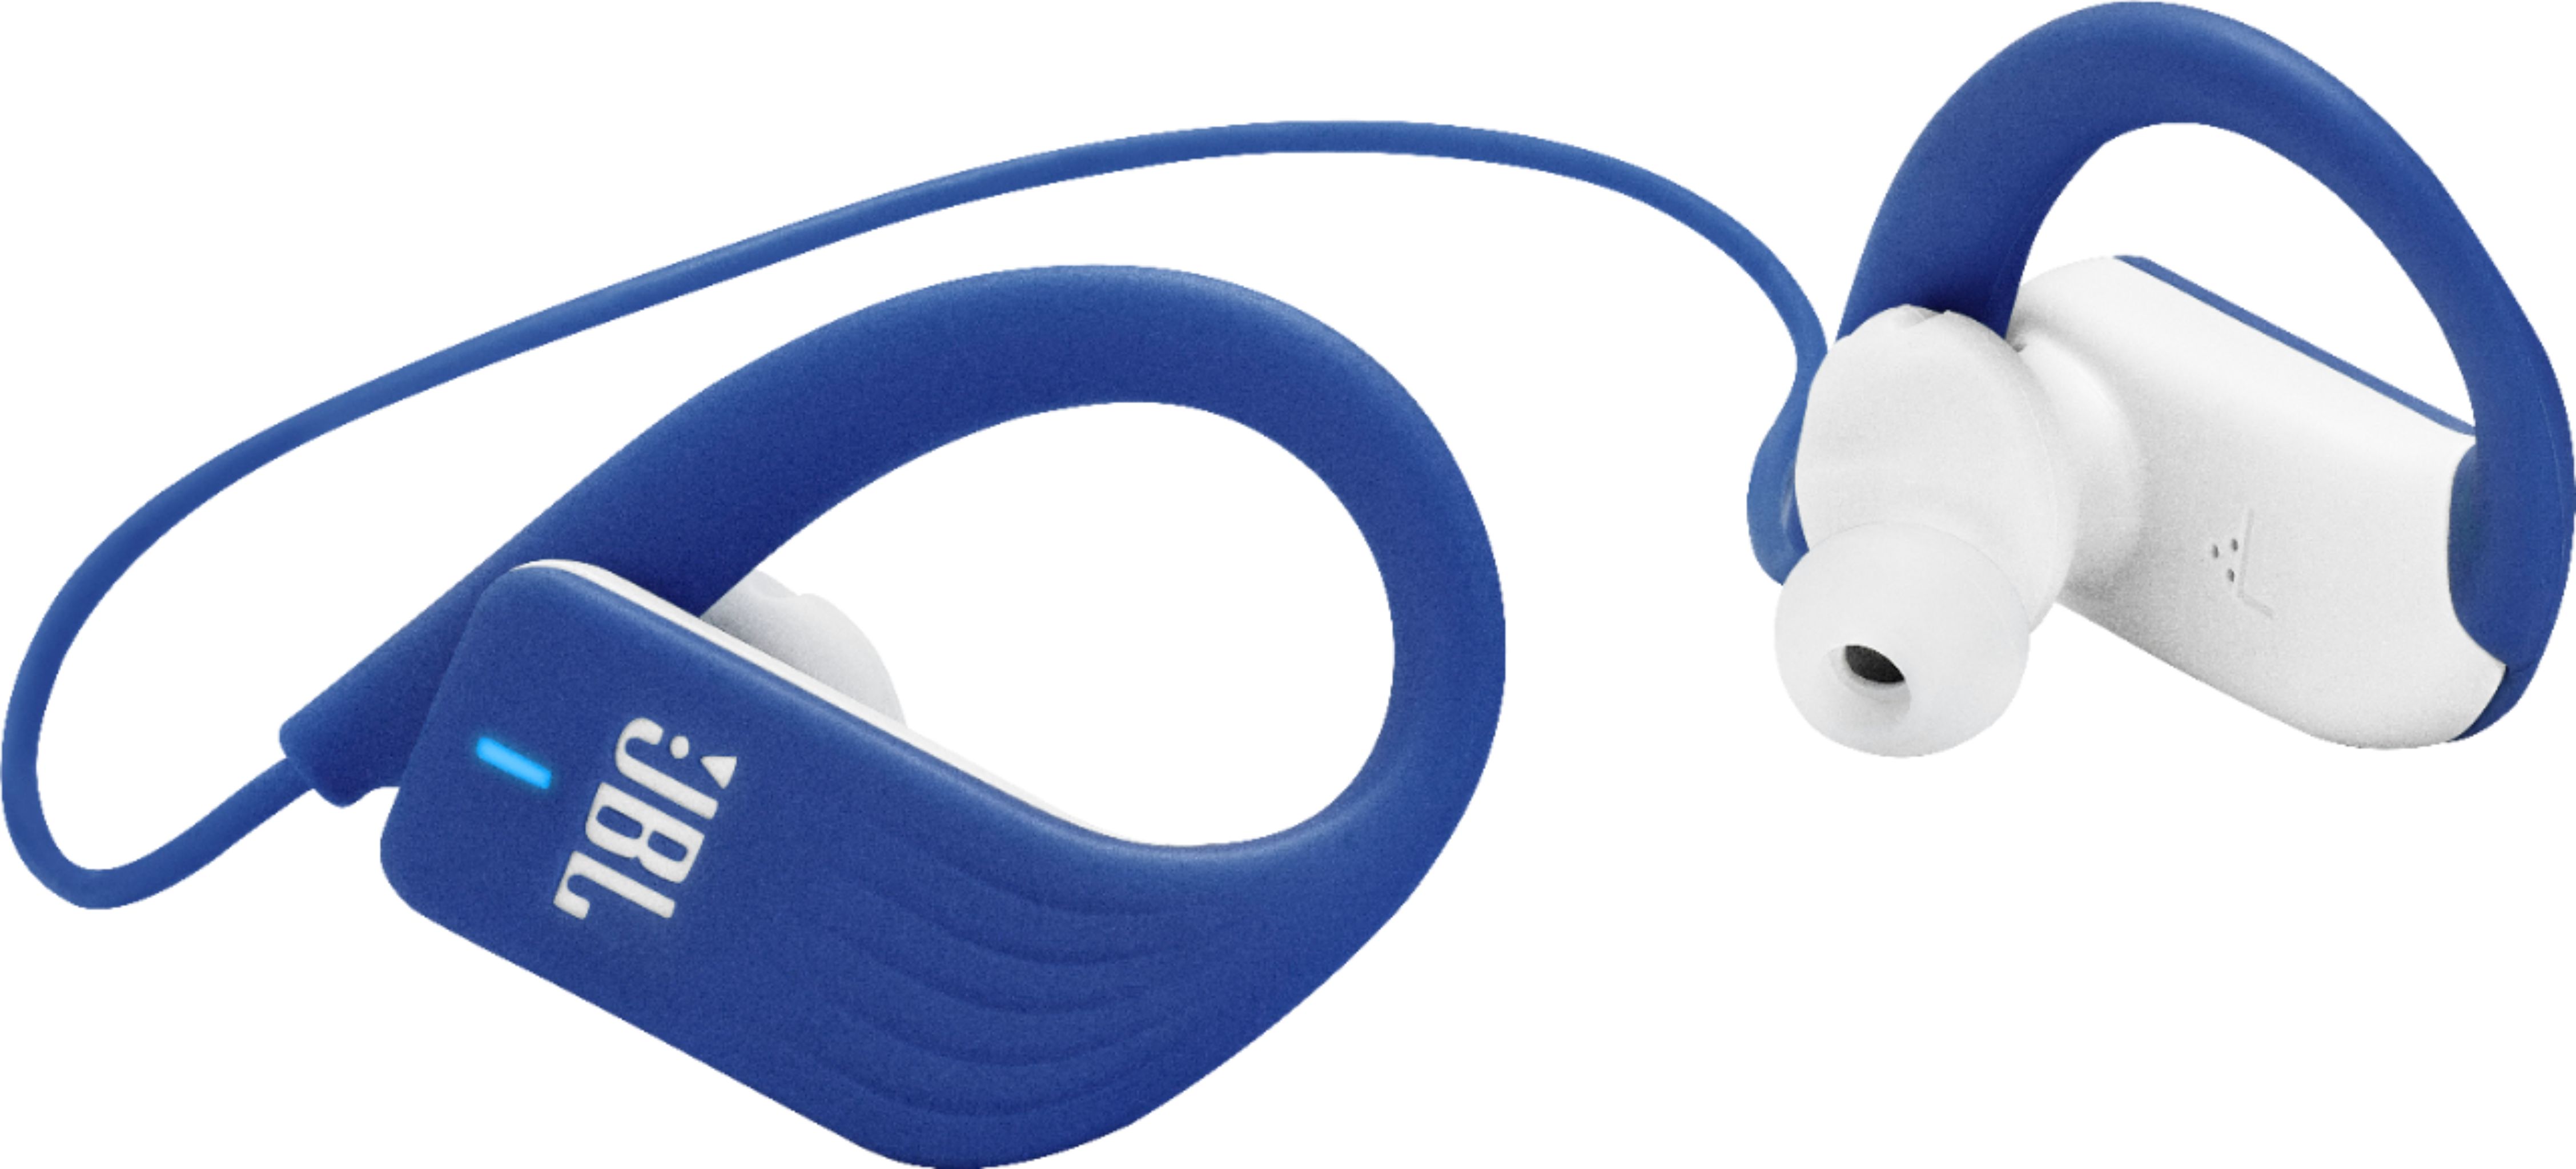 Endurance Sprint Wireless In-Ear Headphones Blue JBLENDURSPRINTBLU - Best Buy